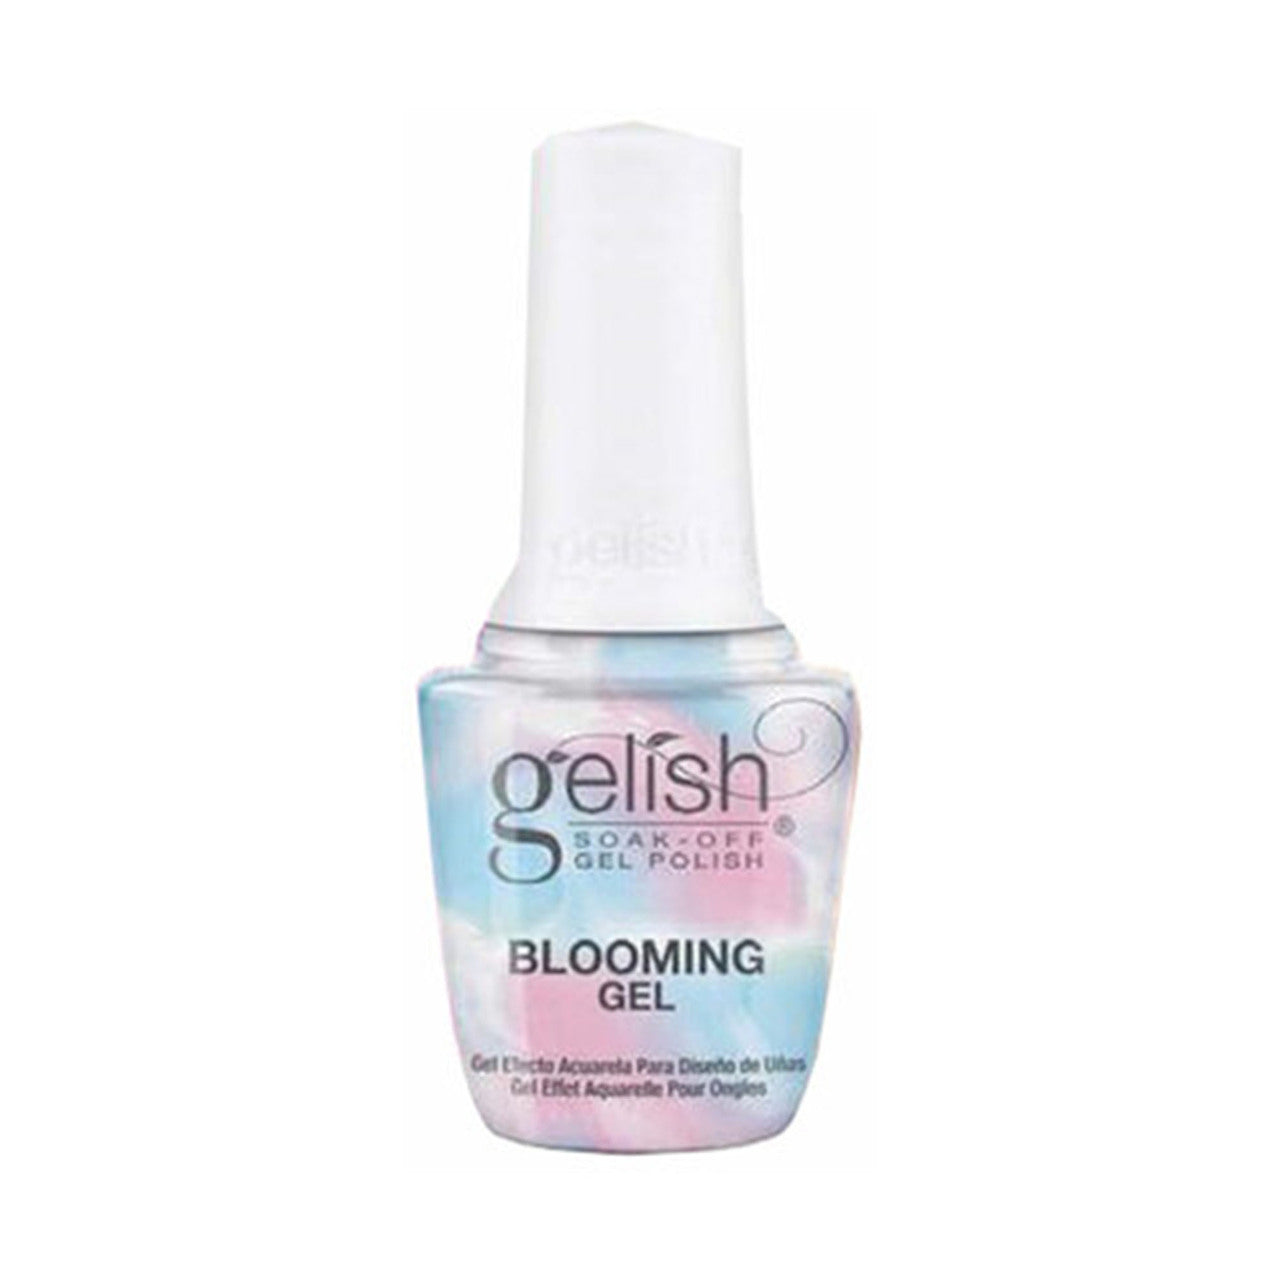 Gelish Blooming Gel 0.5 oz - #1148012 Gelish